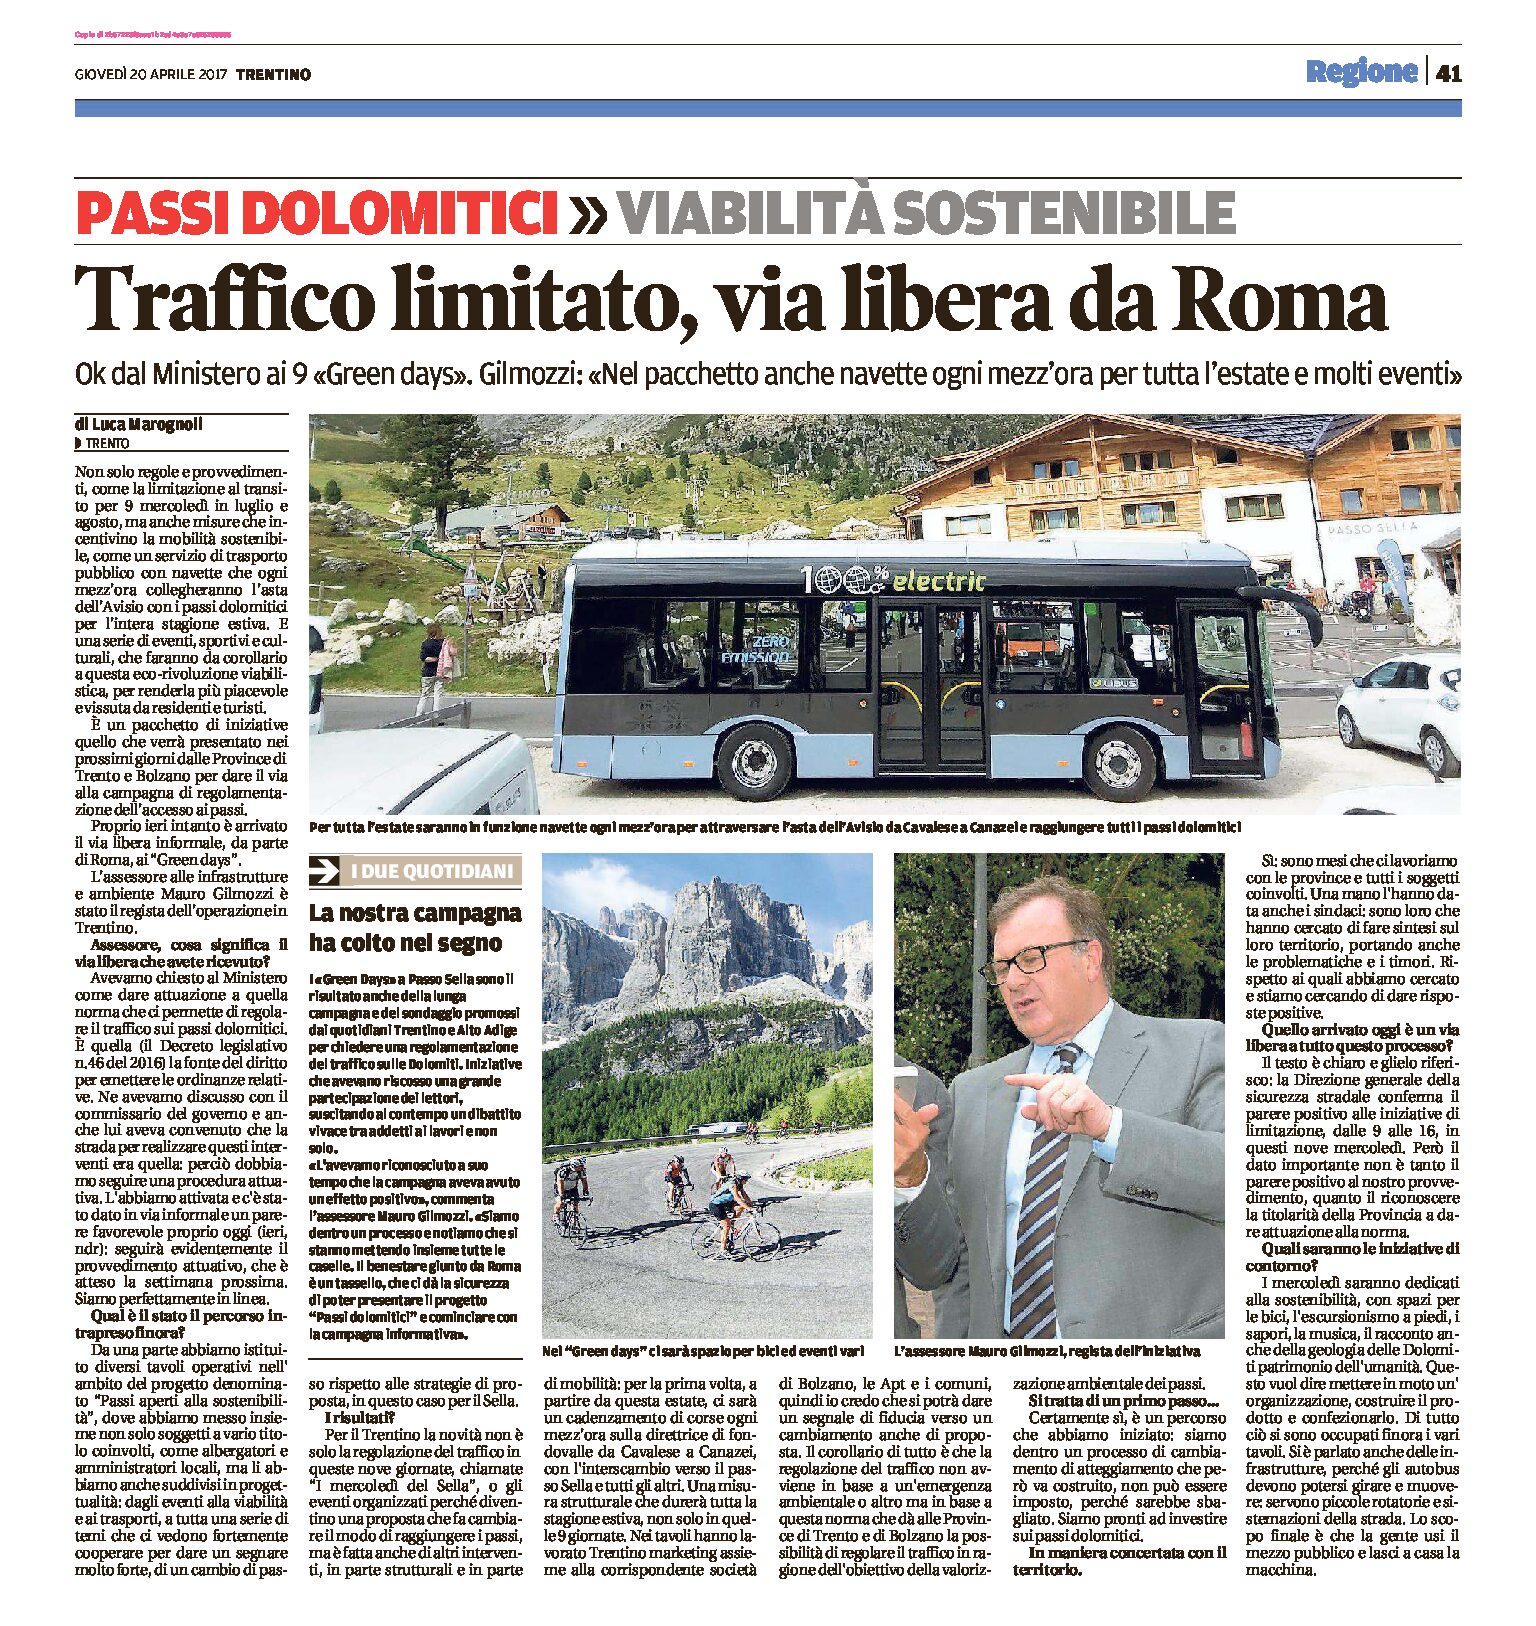 Passi Dolomiti: traffico limitato, via libera da Roma. “Green days” e navette ogni mezz’ora